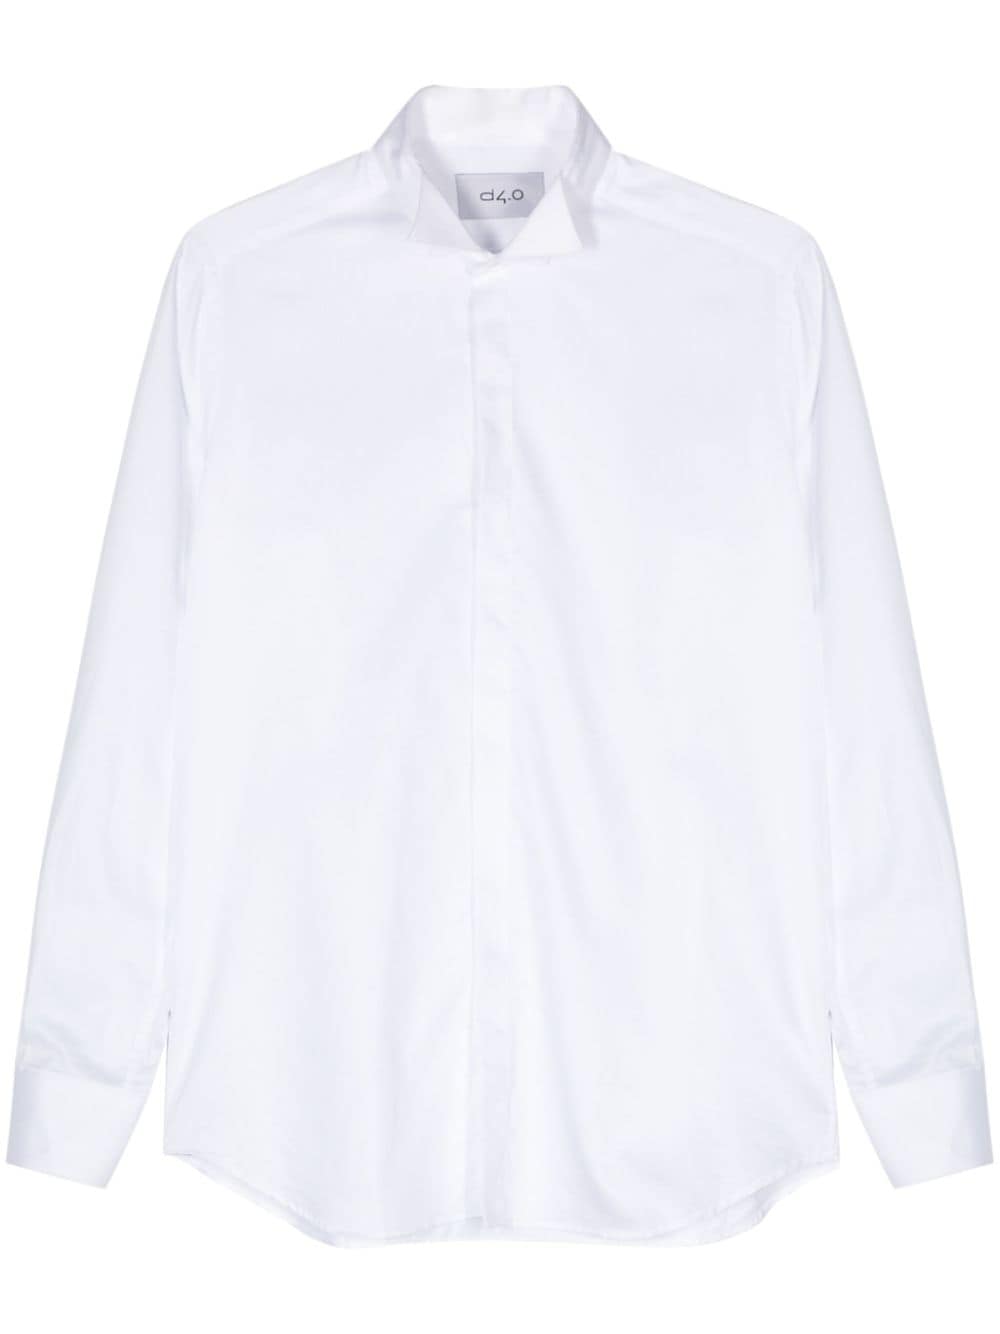 D4.0 Cotton Poplin Shirt In White